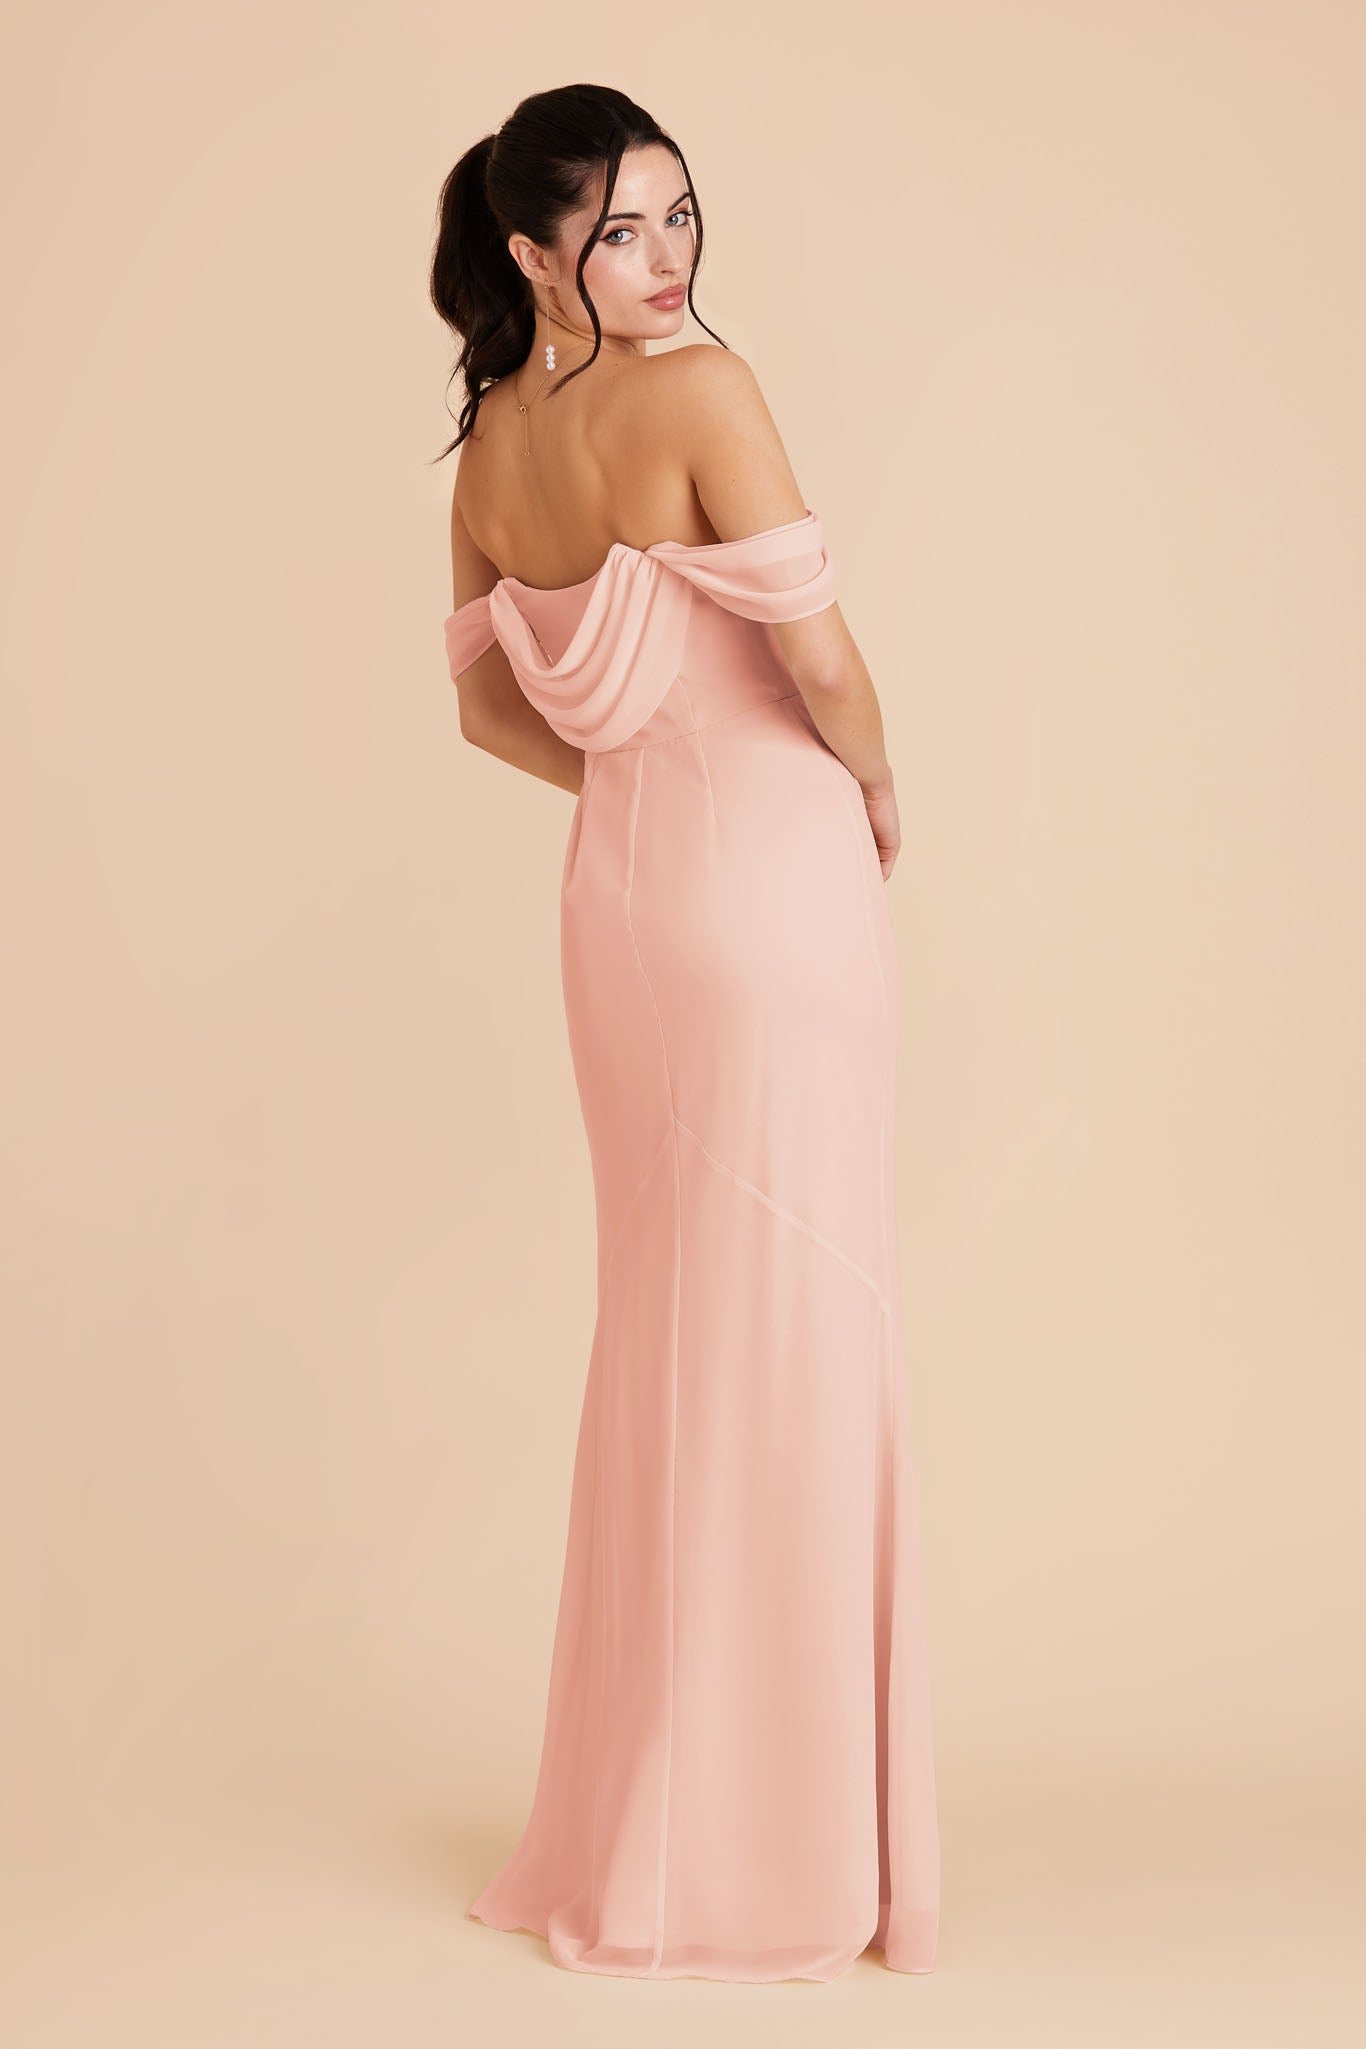 Blush Pink Mira Convertible Dress by Birdy Grey